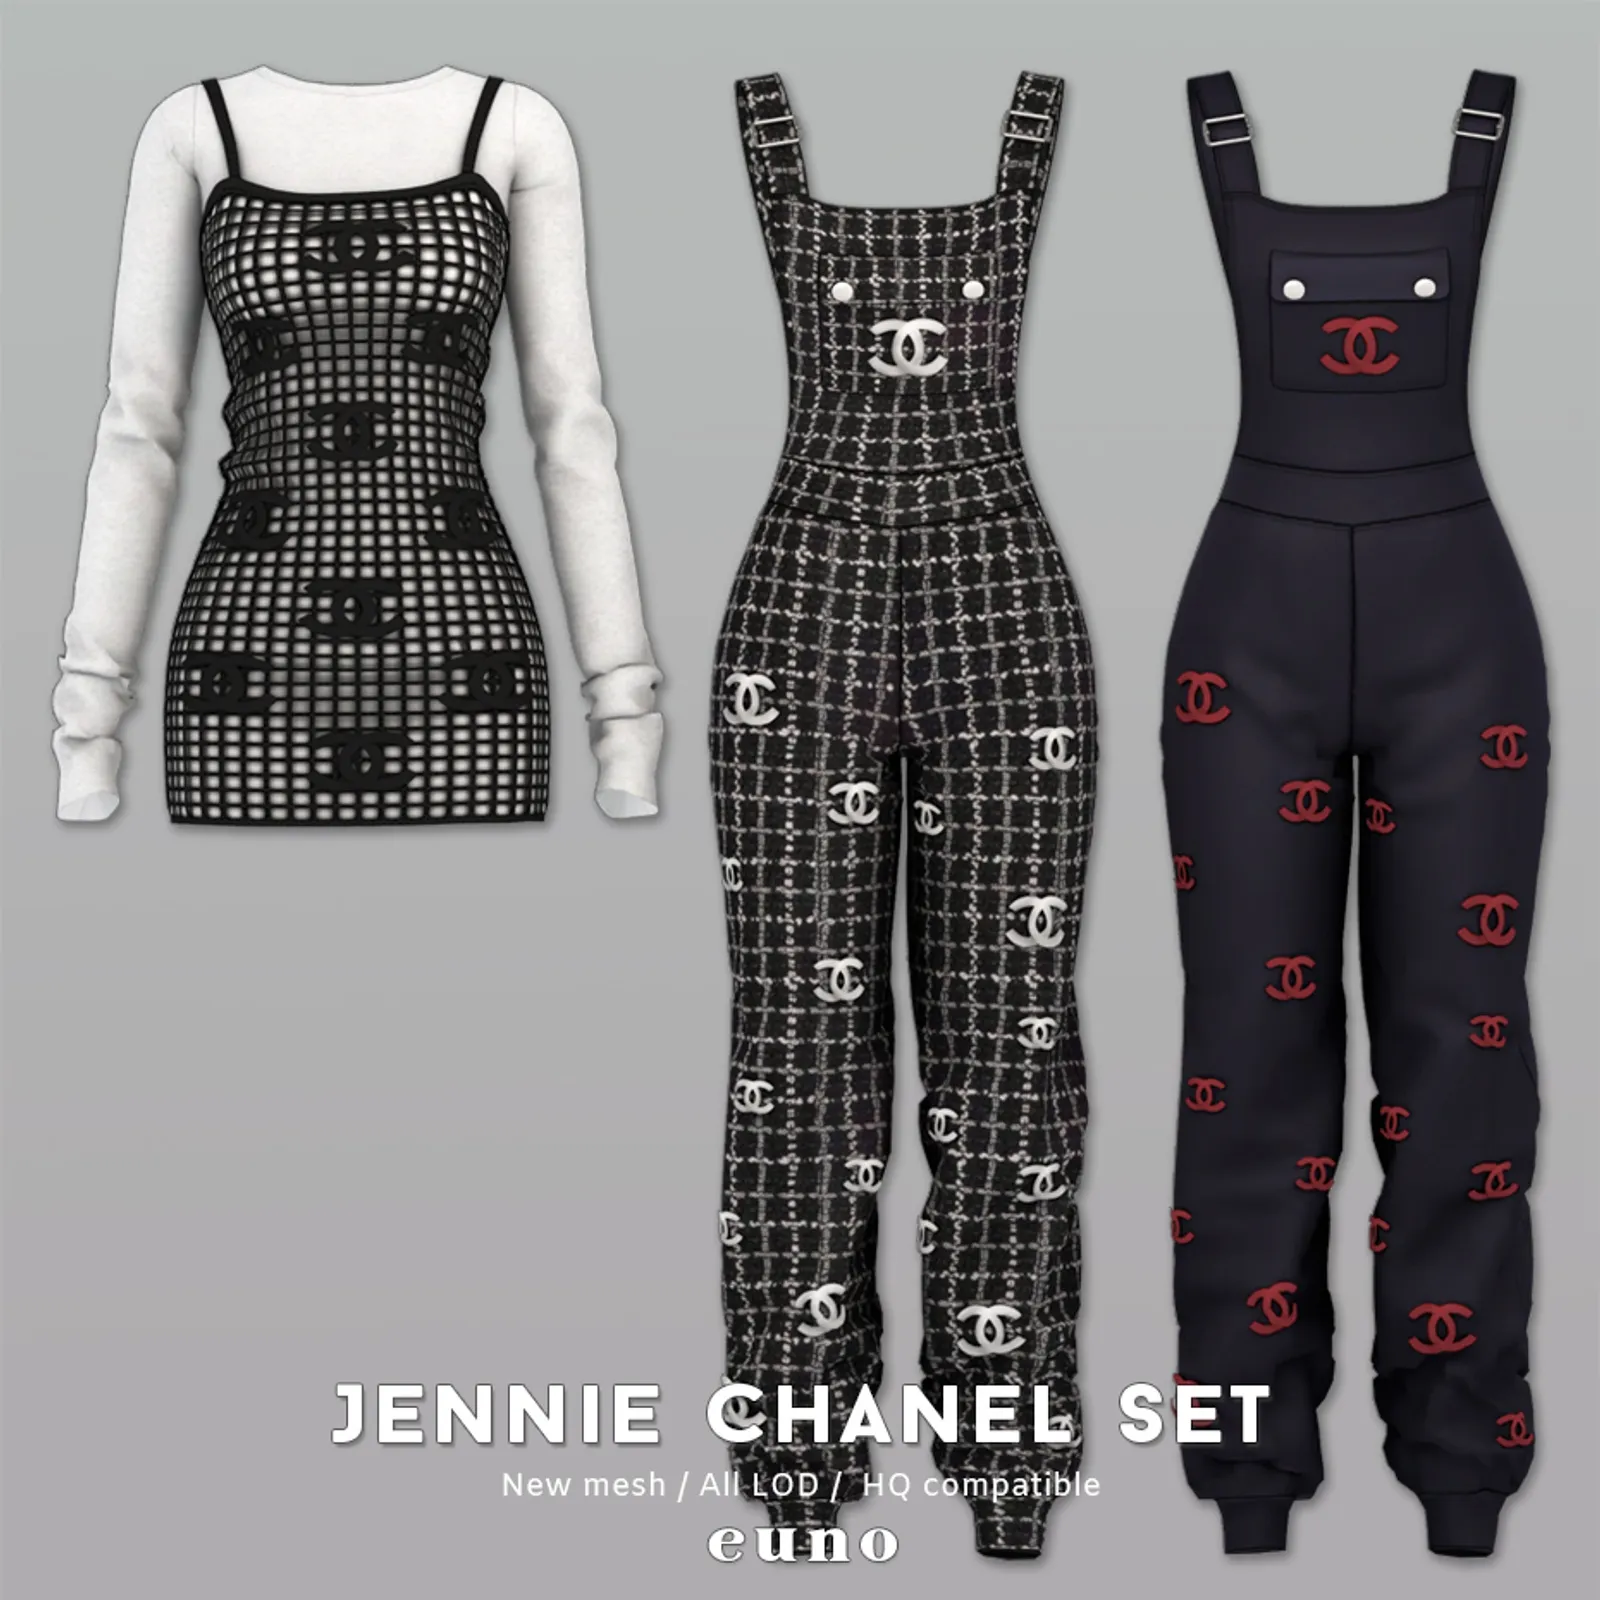 Jennie Chanel Set